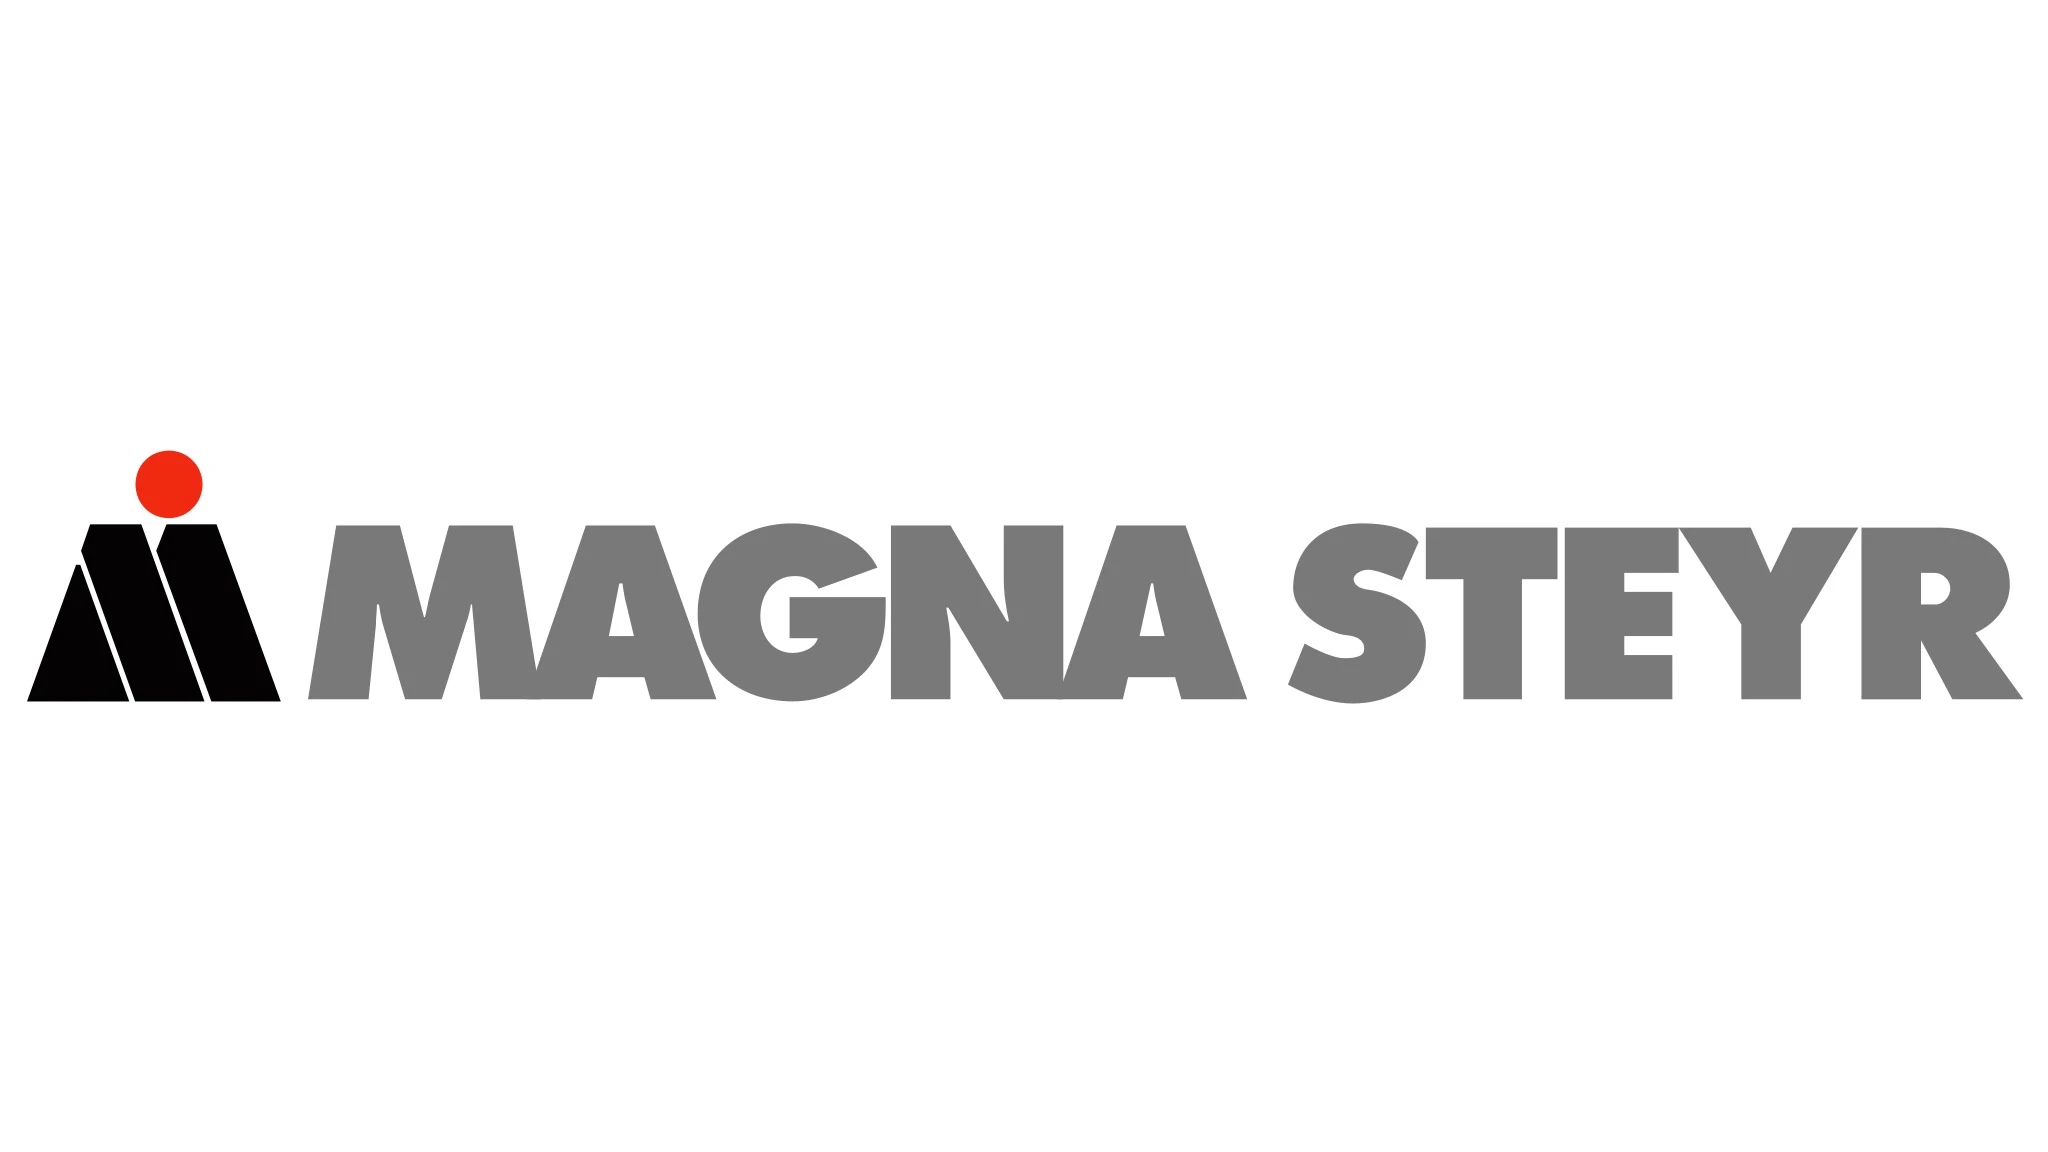 magna steyr logo 1